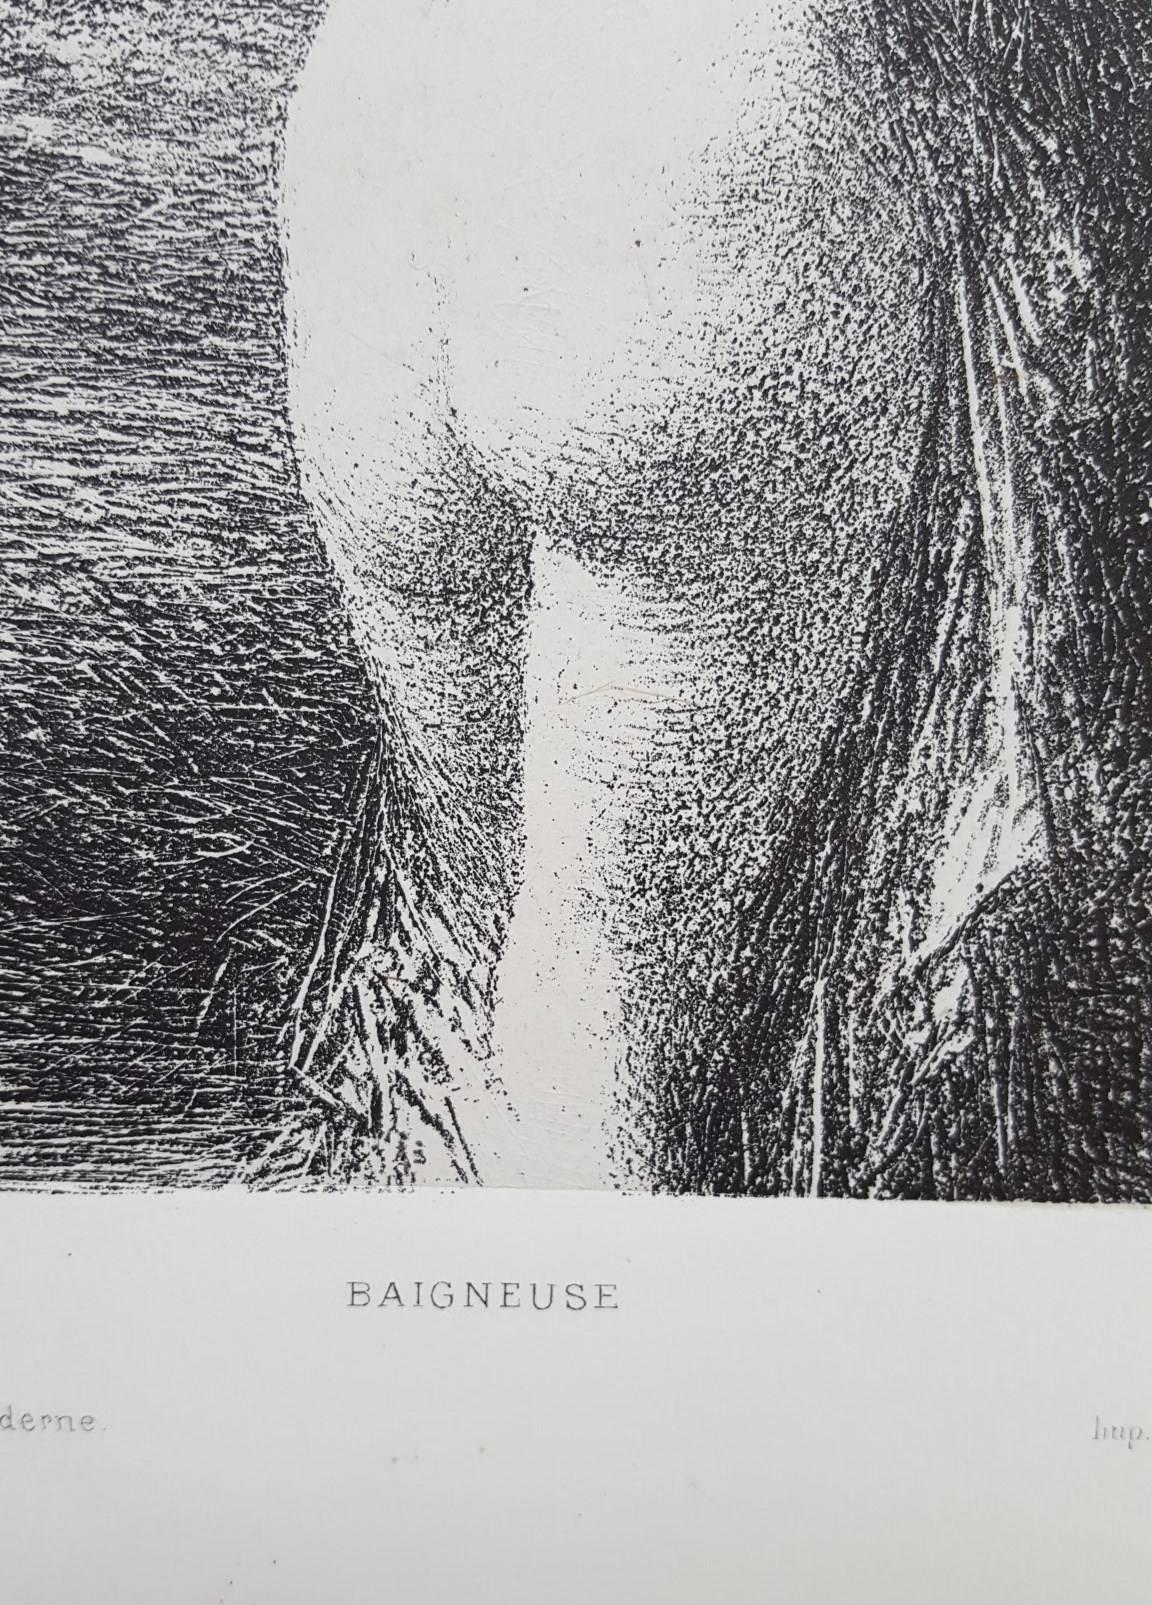 Baigneuse - Impressionist Print by Henri Fantin-Latour